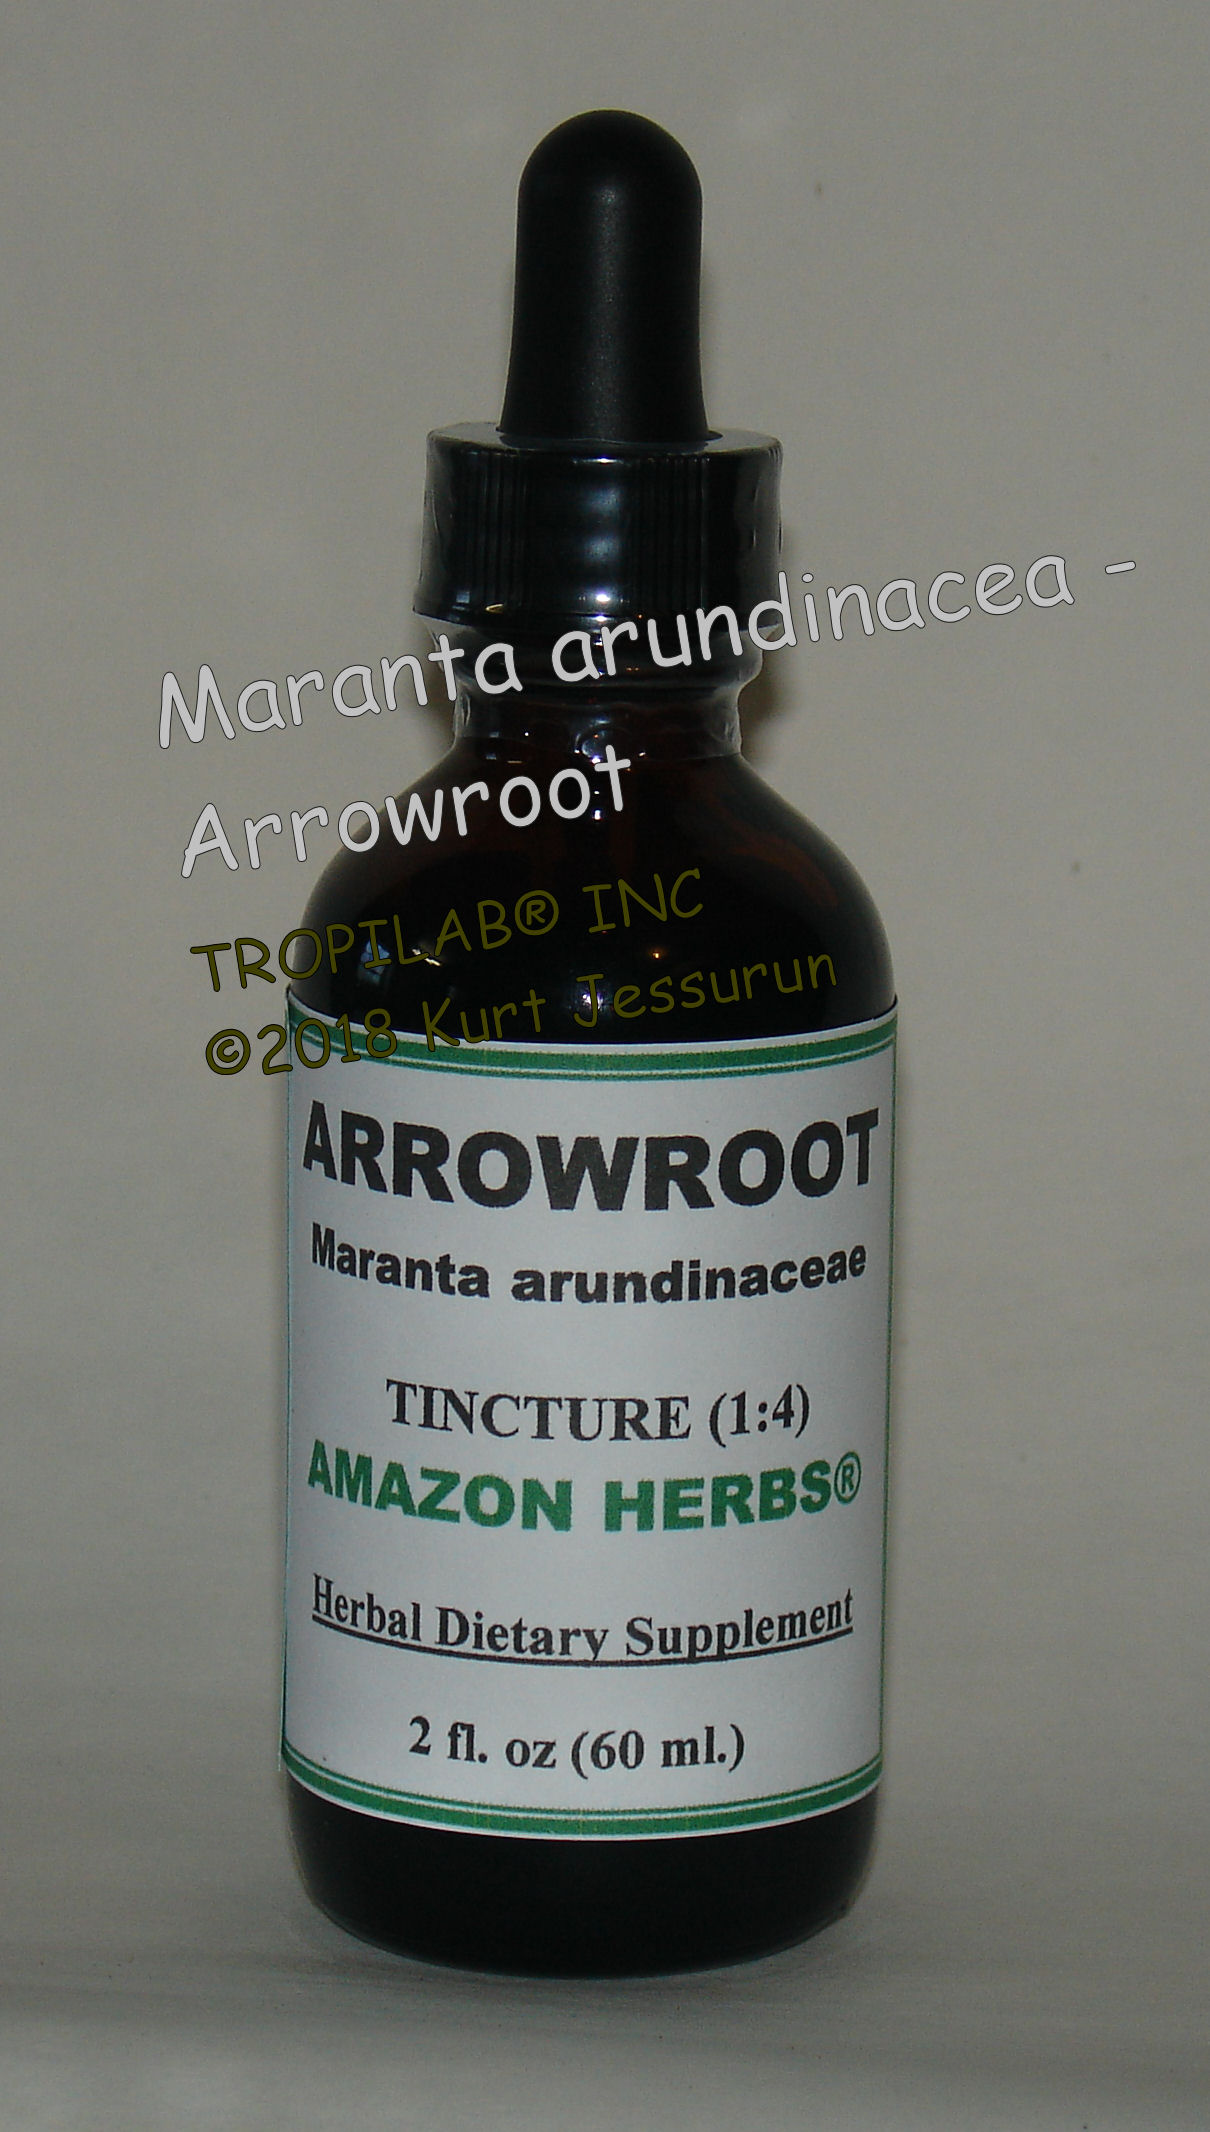 Maranta arundinacea - Arrowroot tincture - Tropilab.